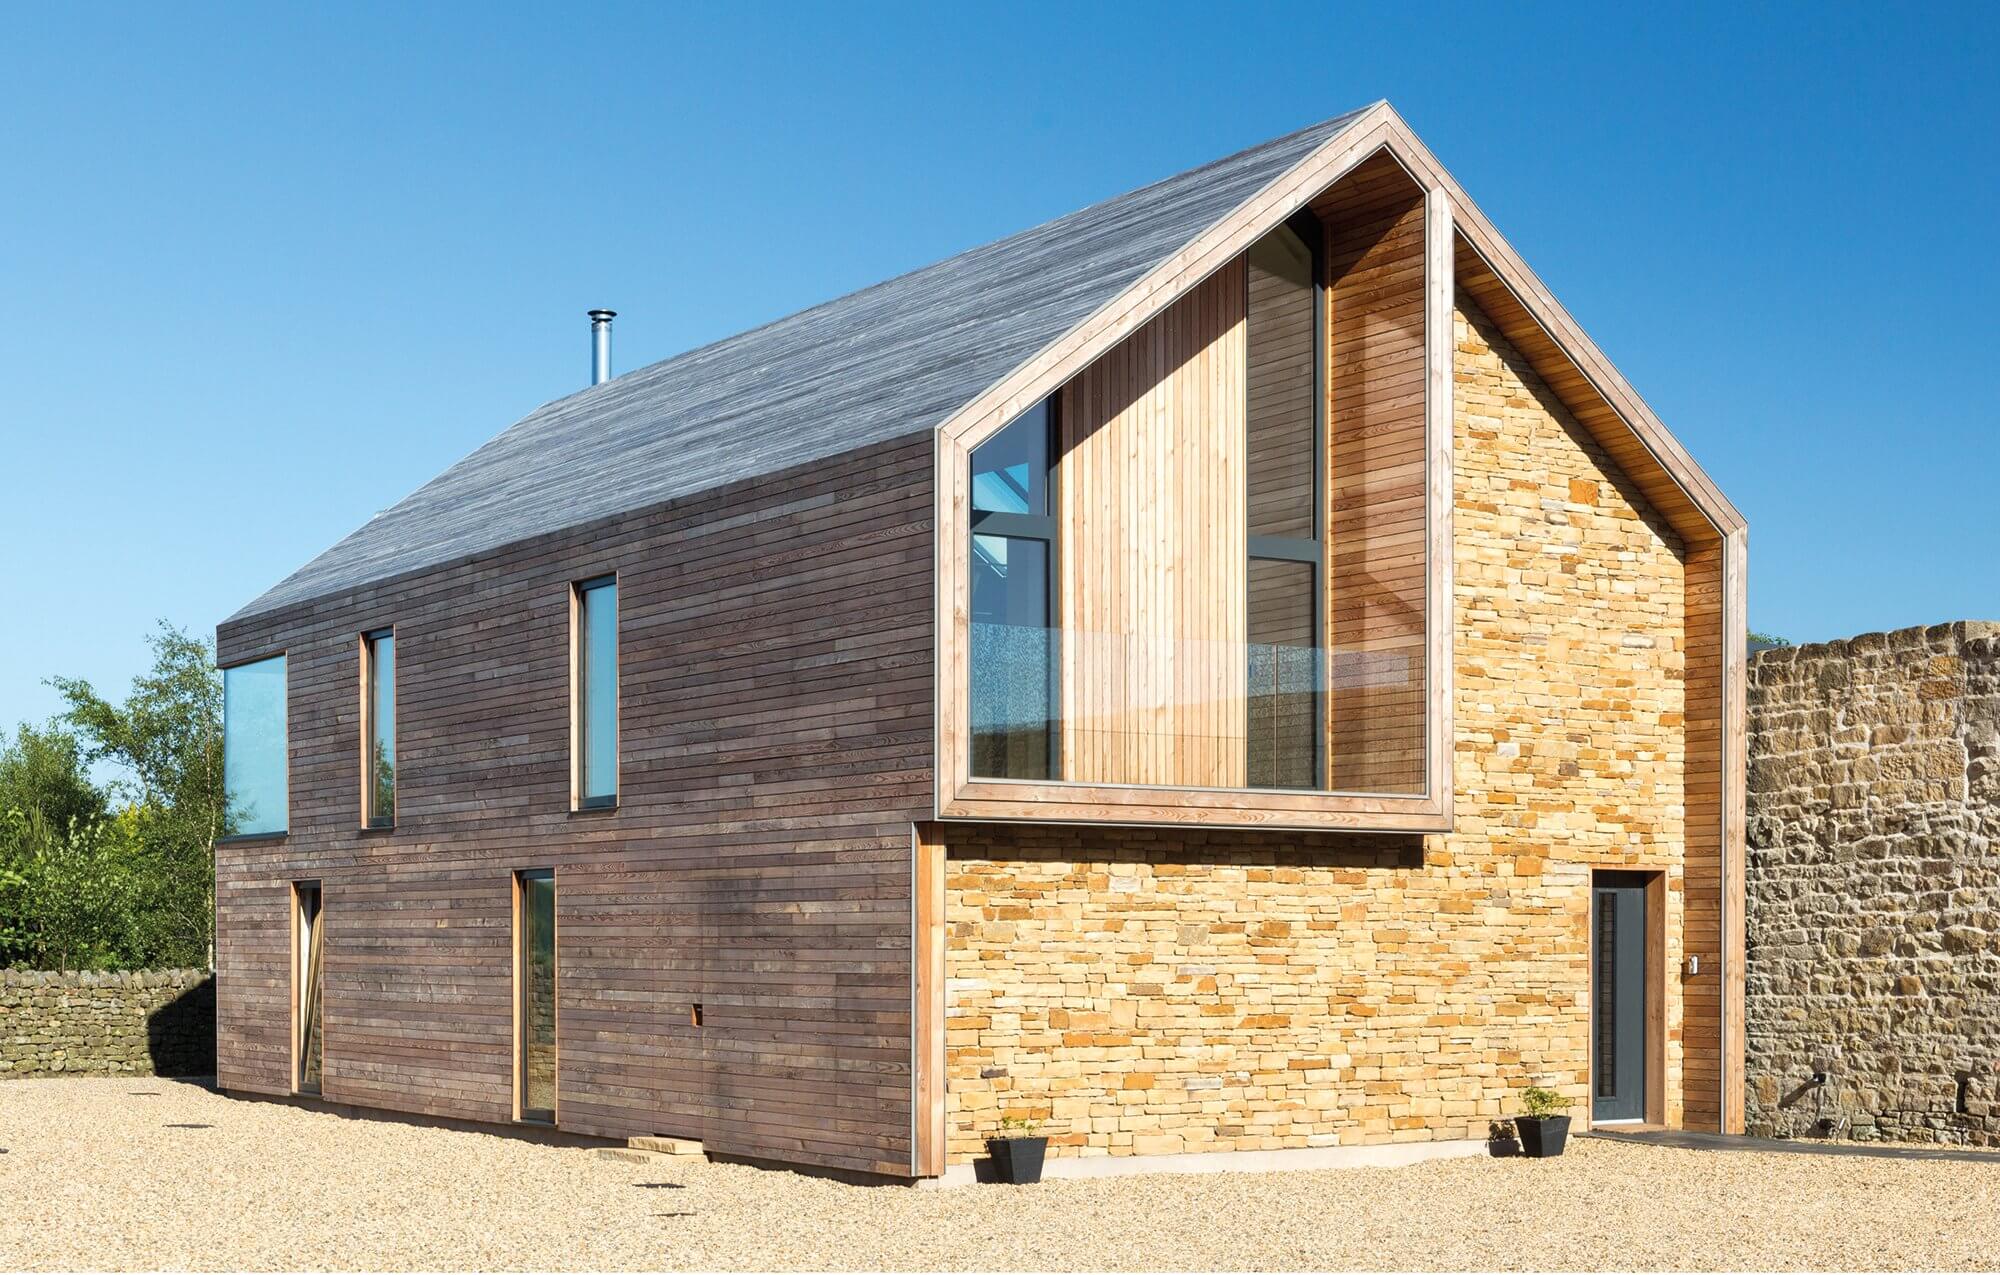 Timber frame barn-style self-build